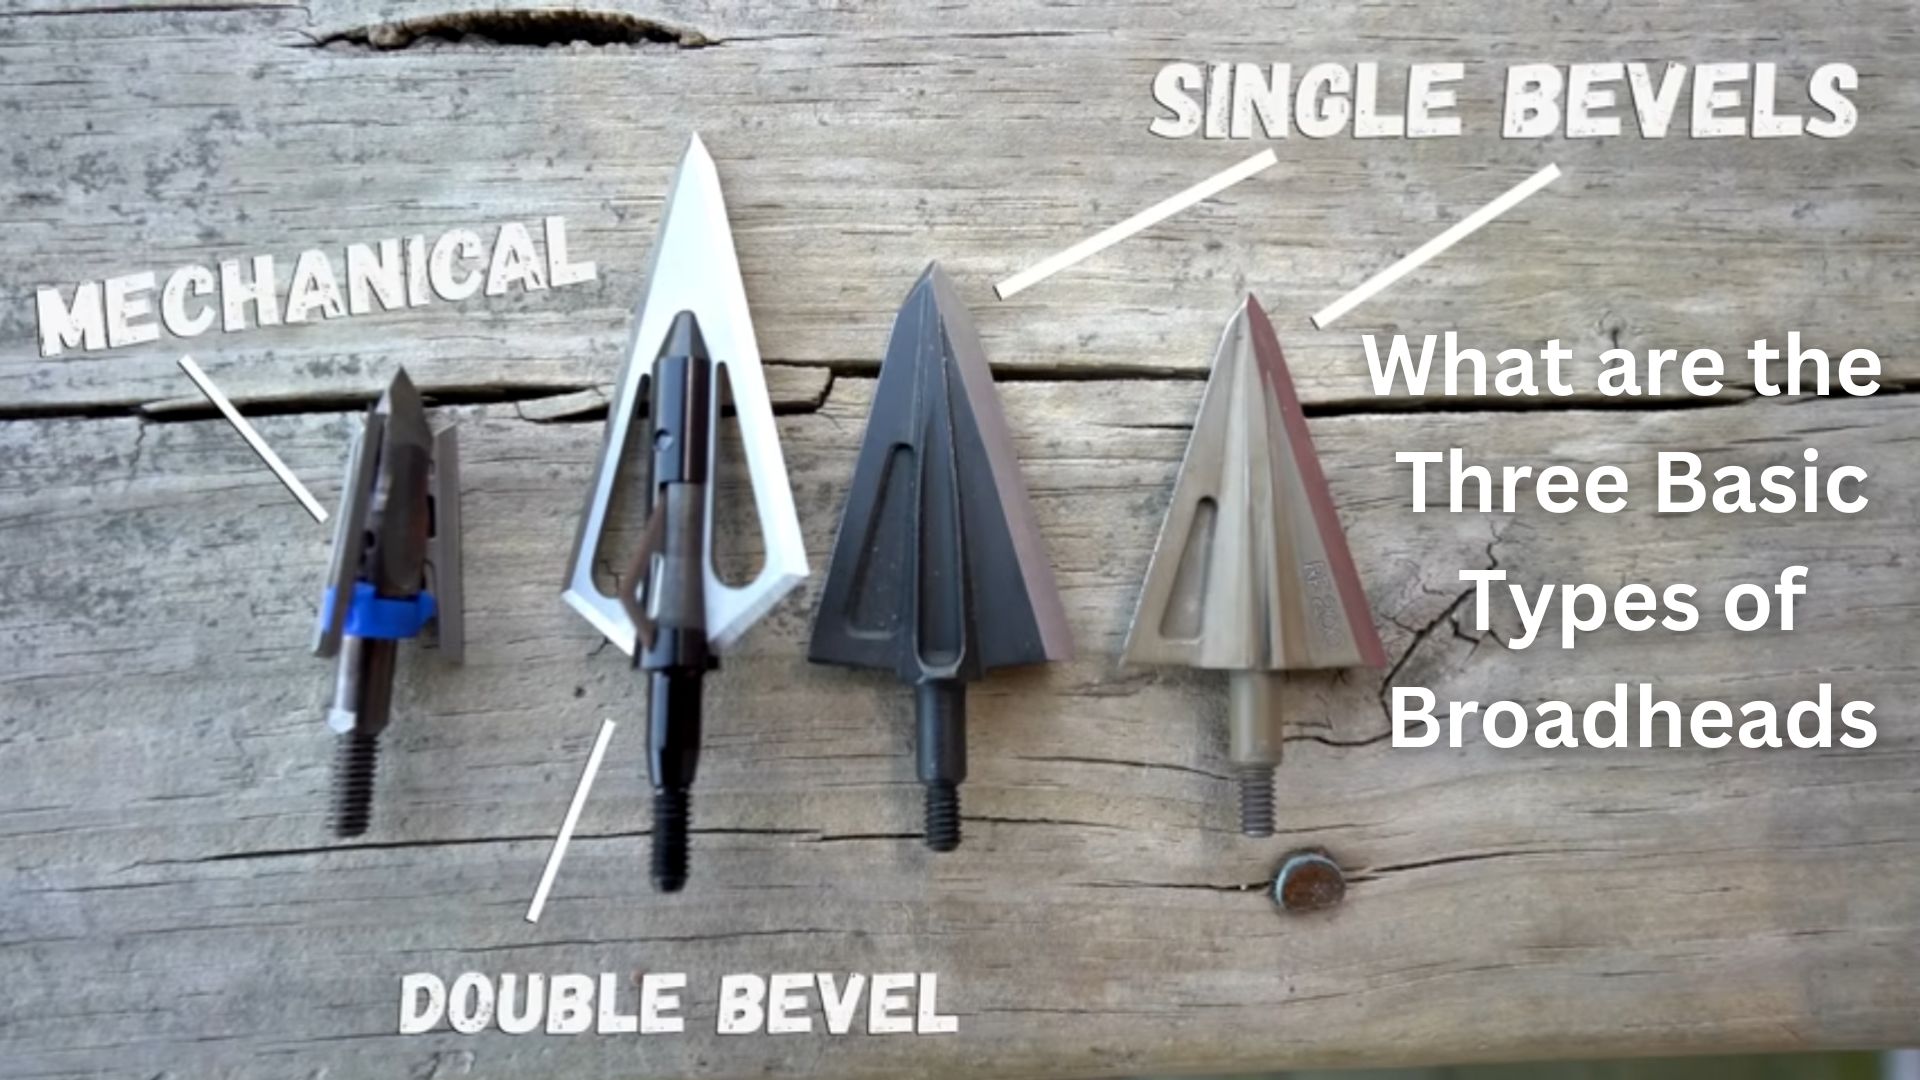 Three Basic Types of Broadheads fixed blade, mechanical, and hybrid broadhead